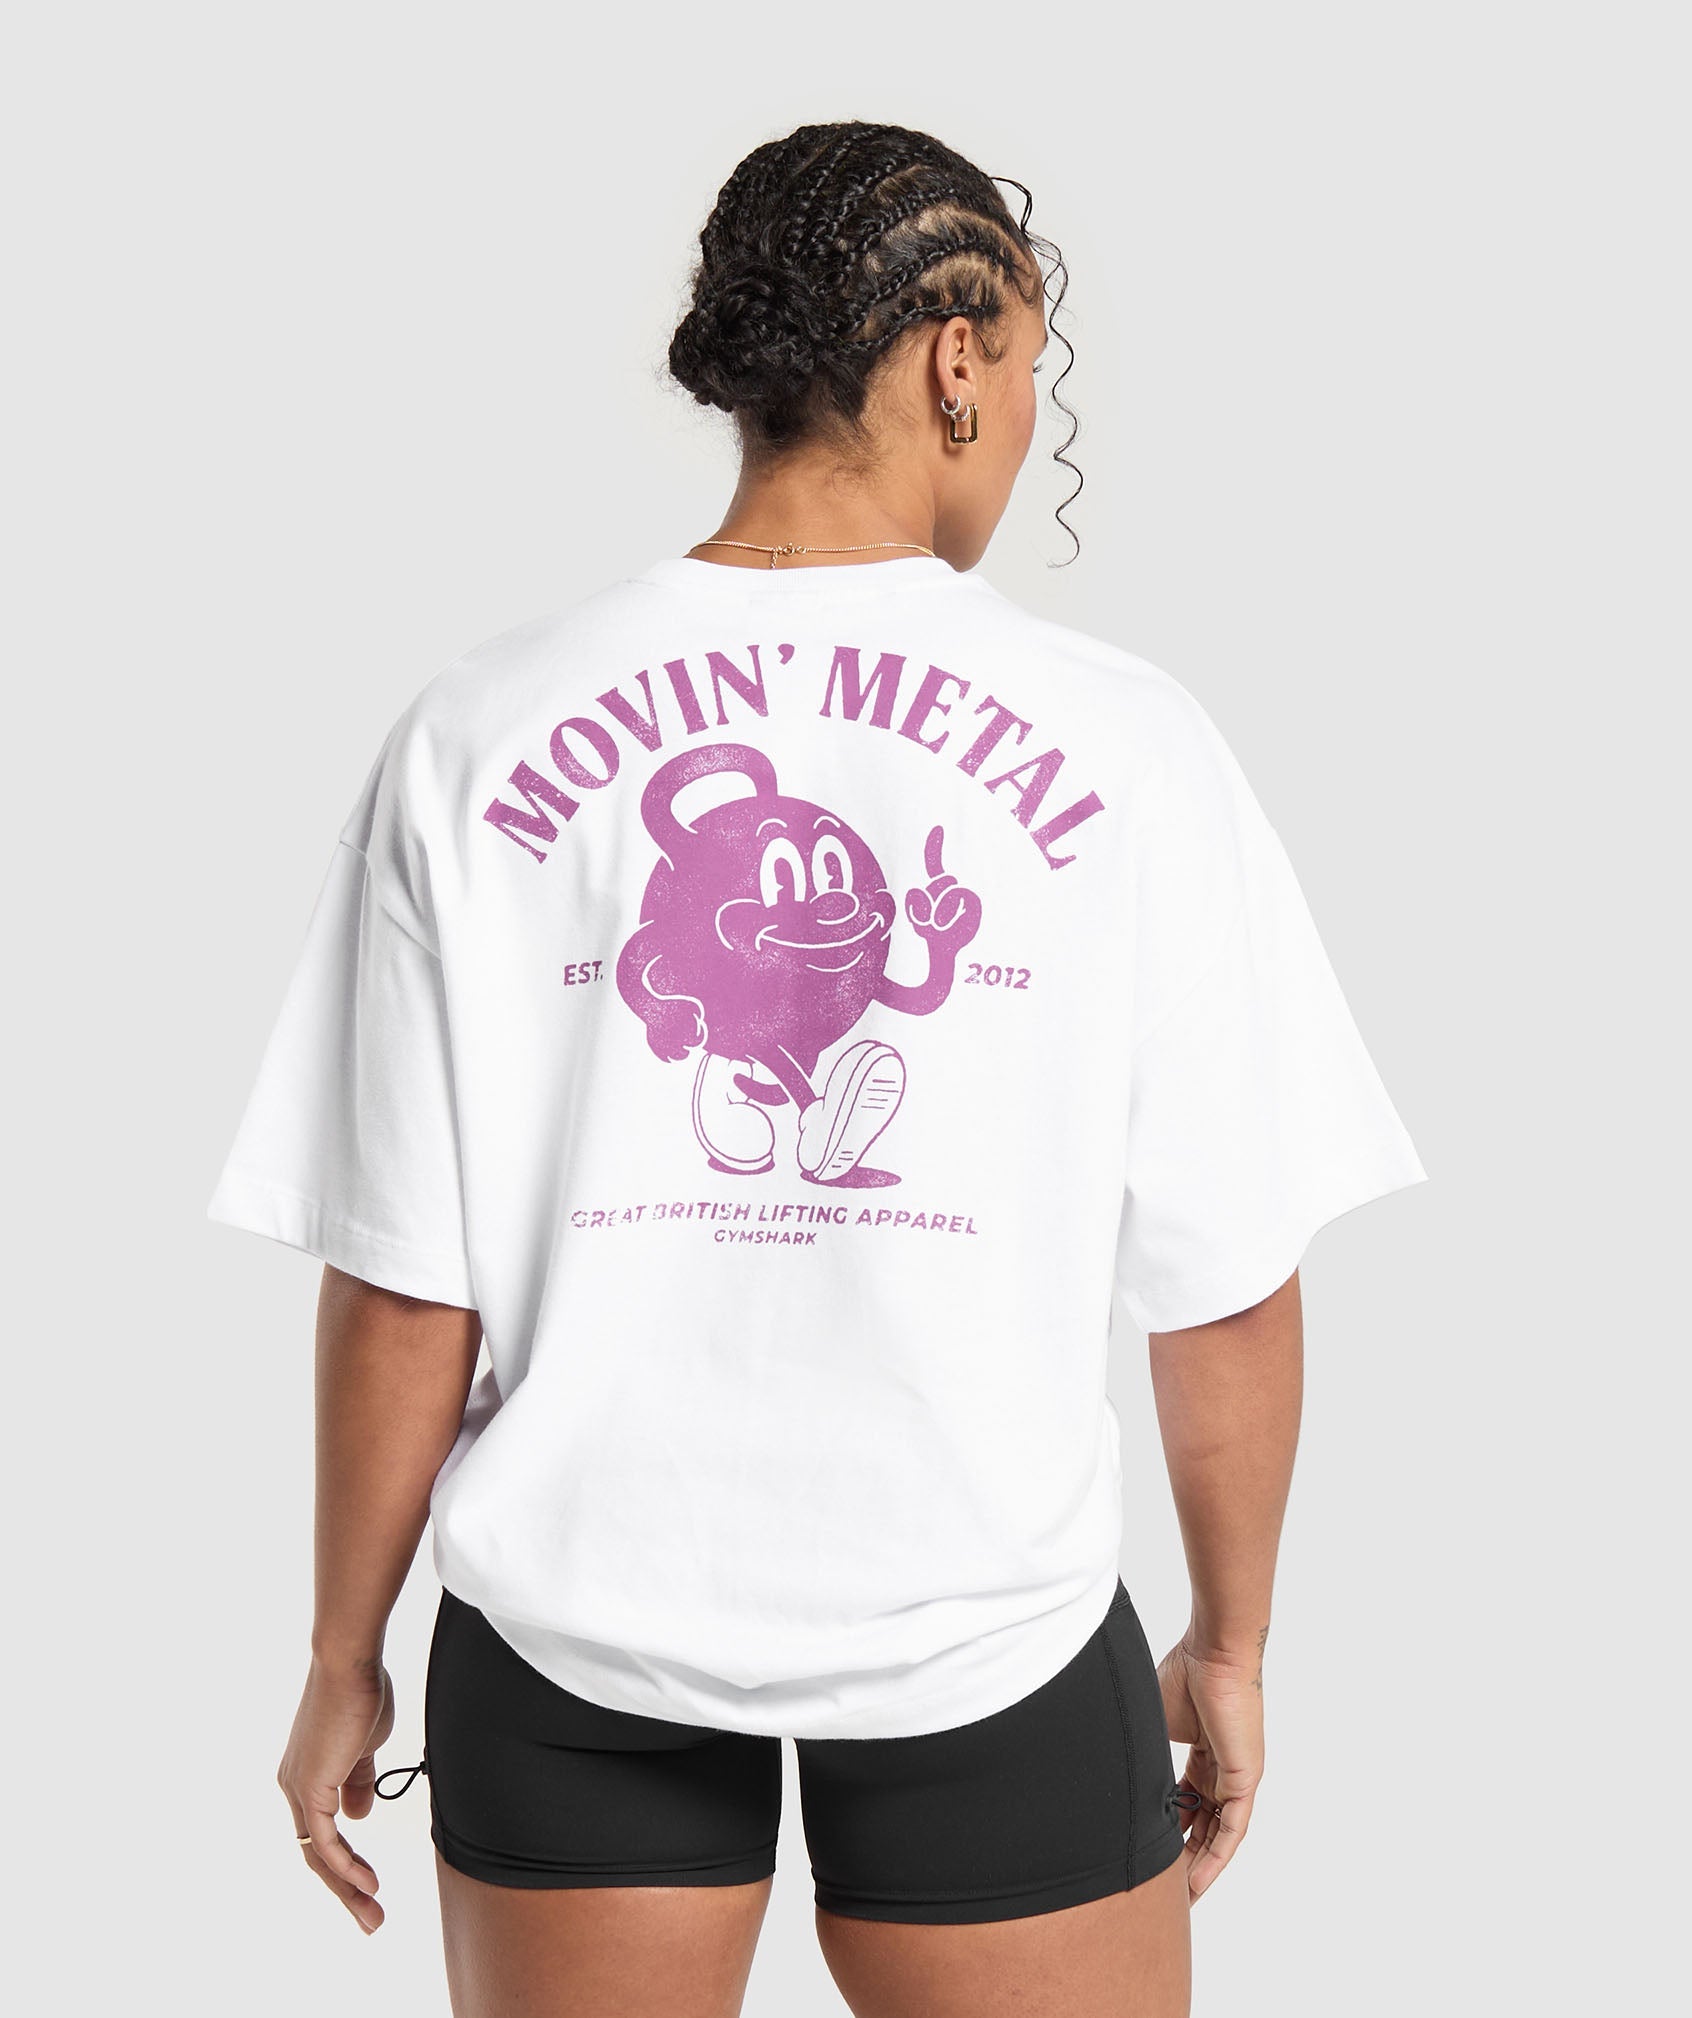 Movin' Metal T-Shirt